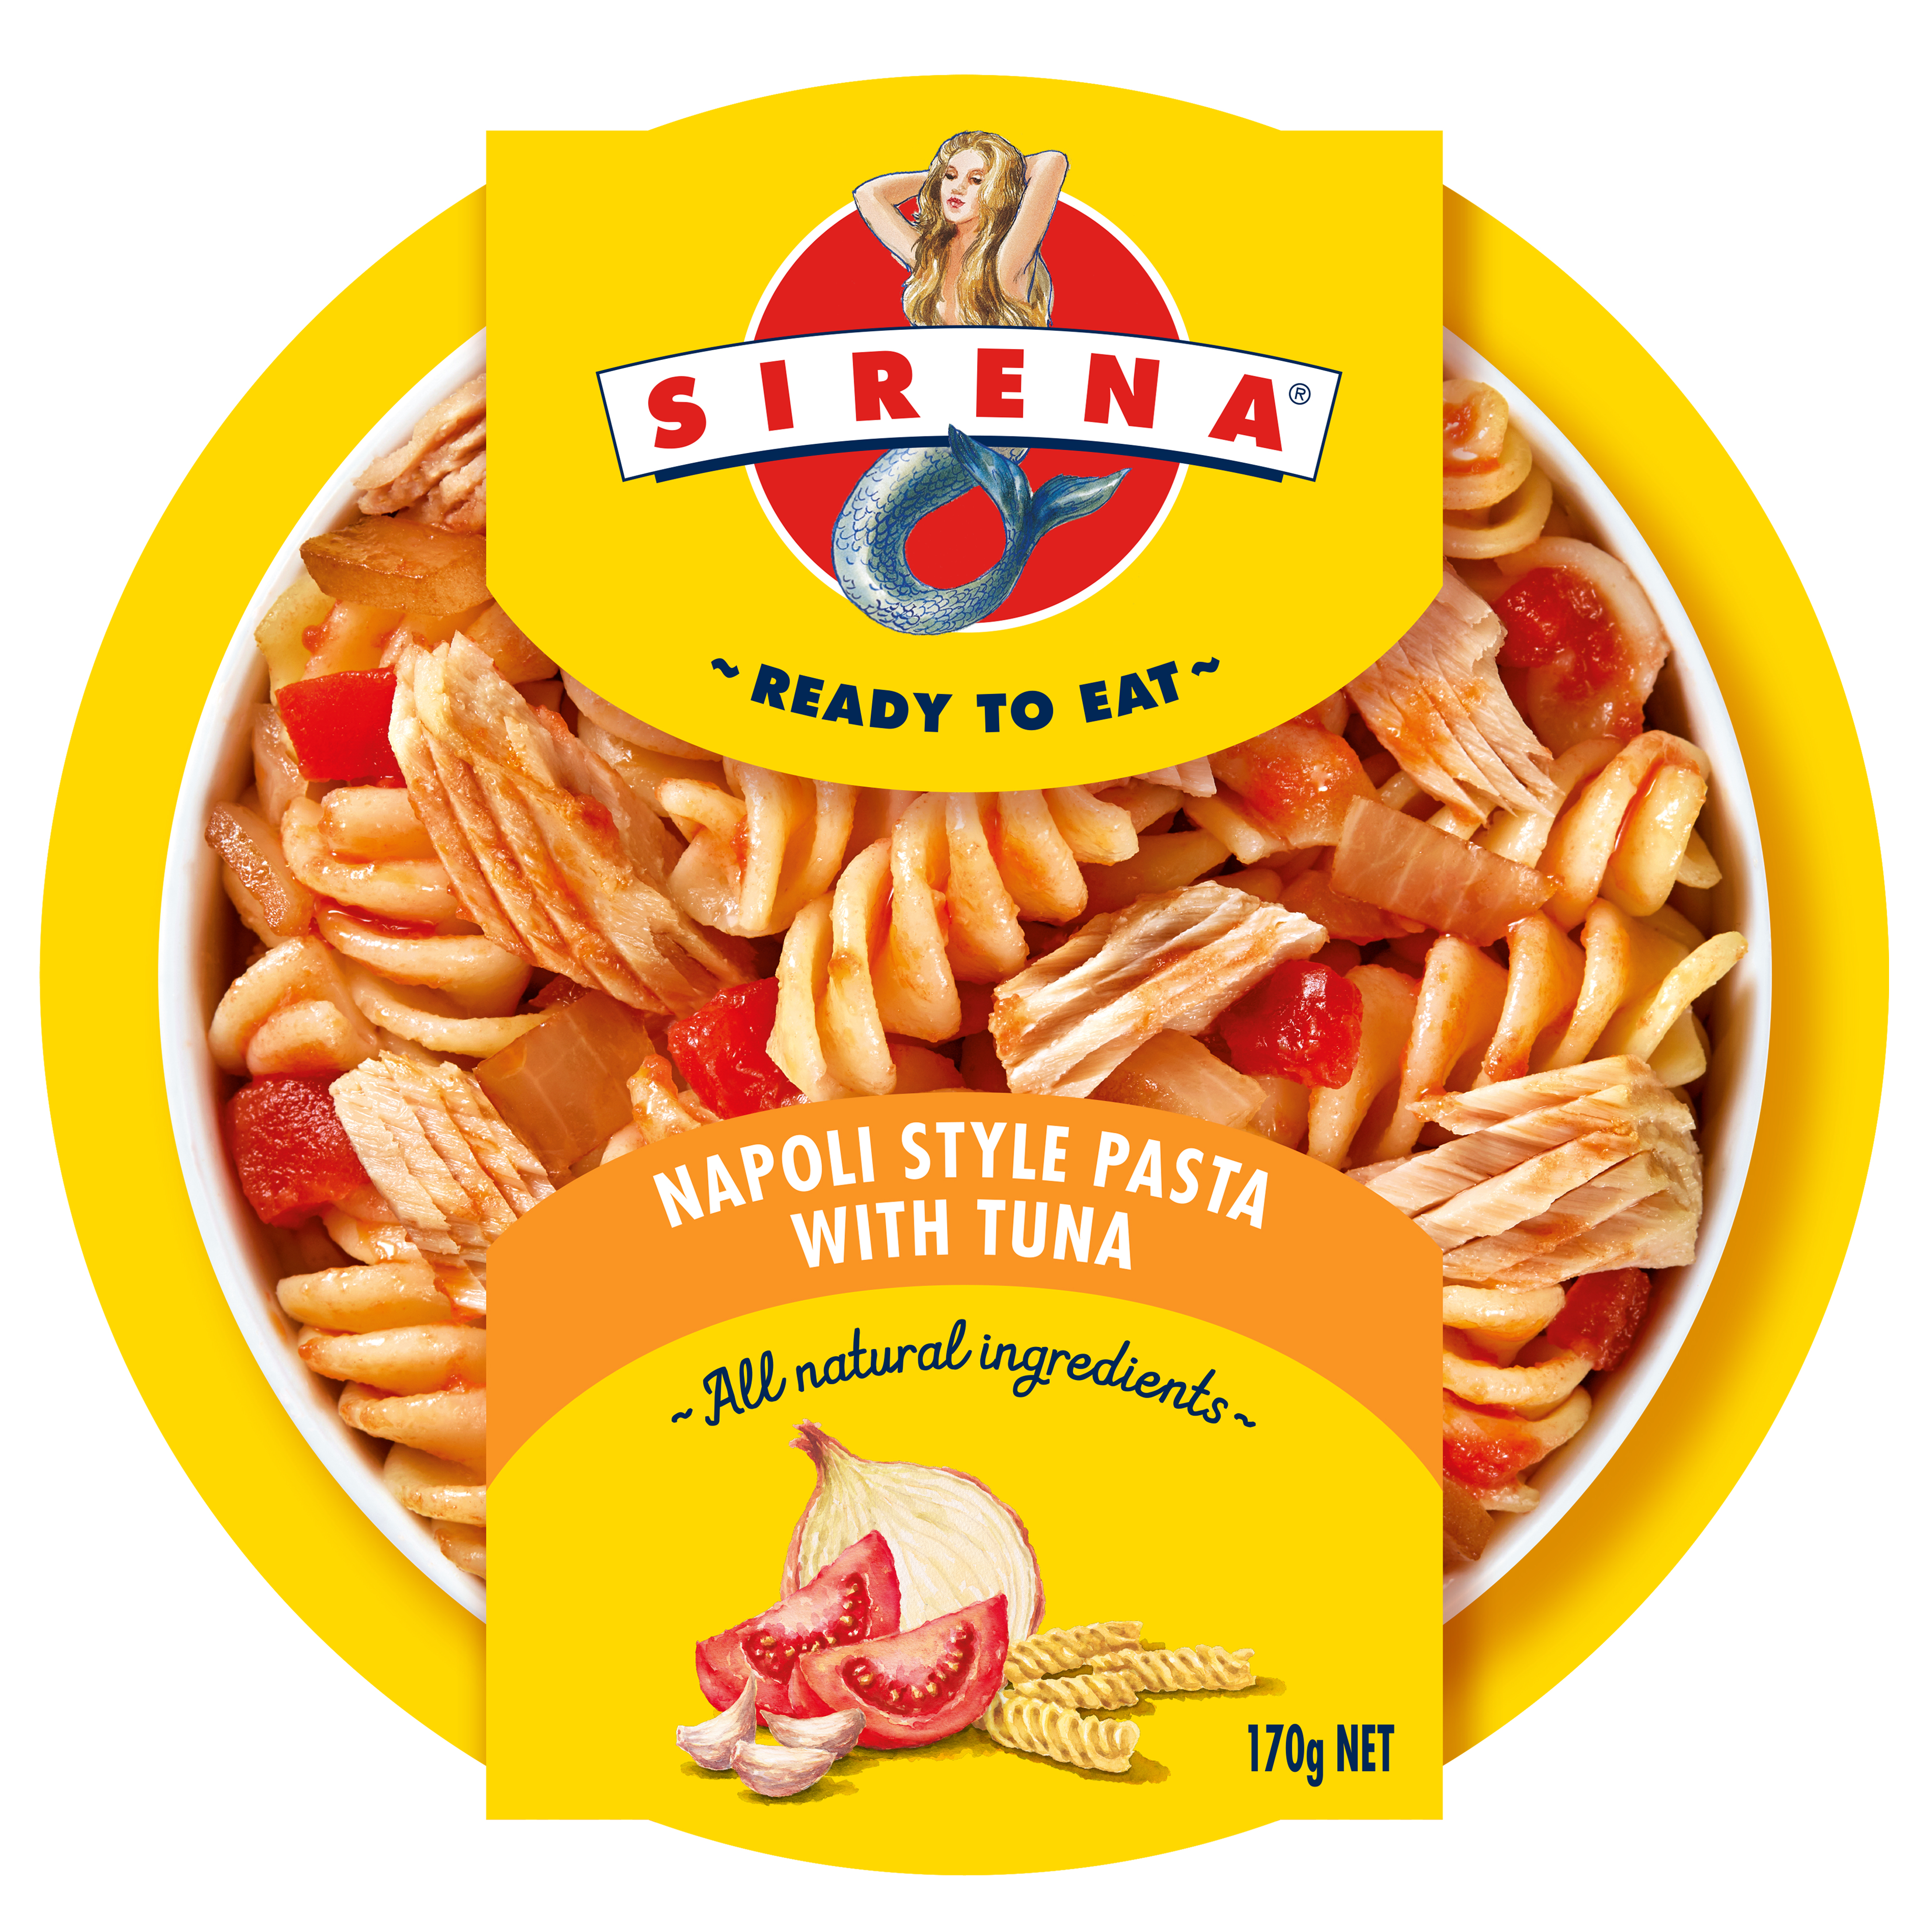 Sirena Ready to Eat Napoli Style Pasta with Tuna image